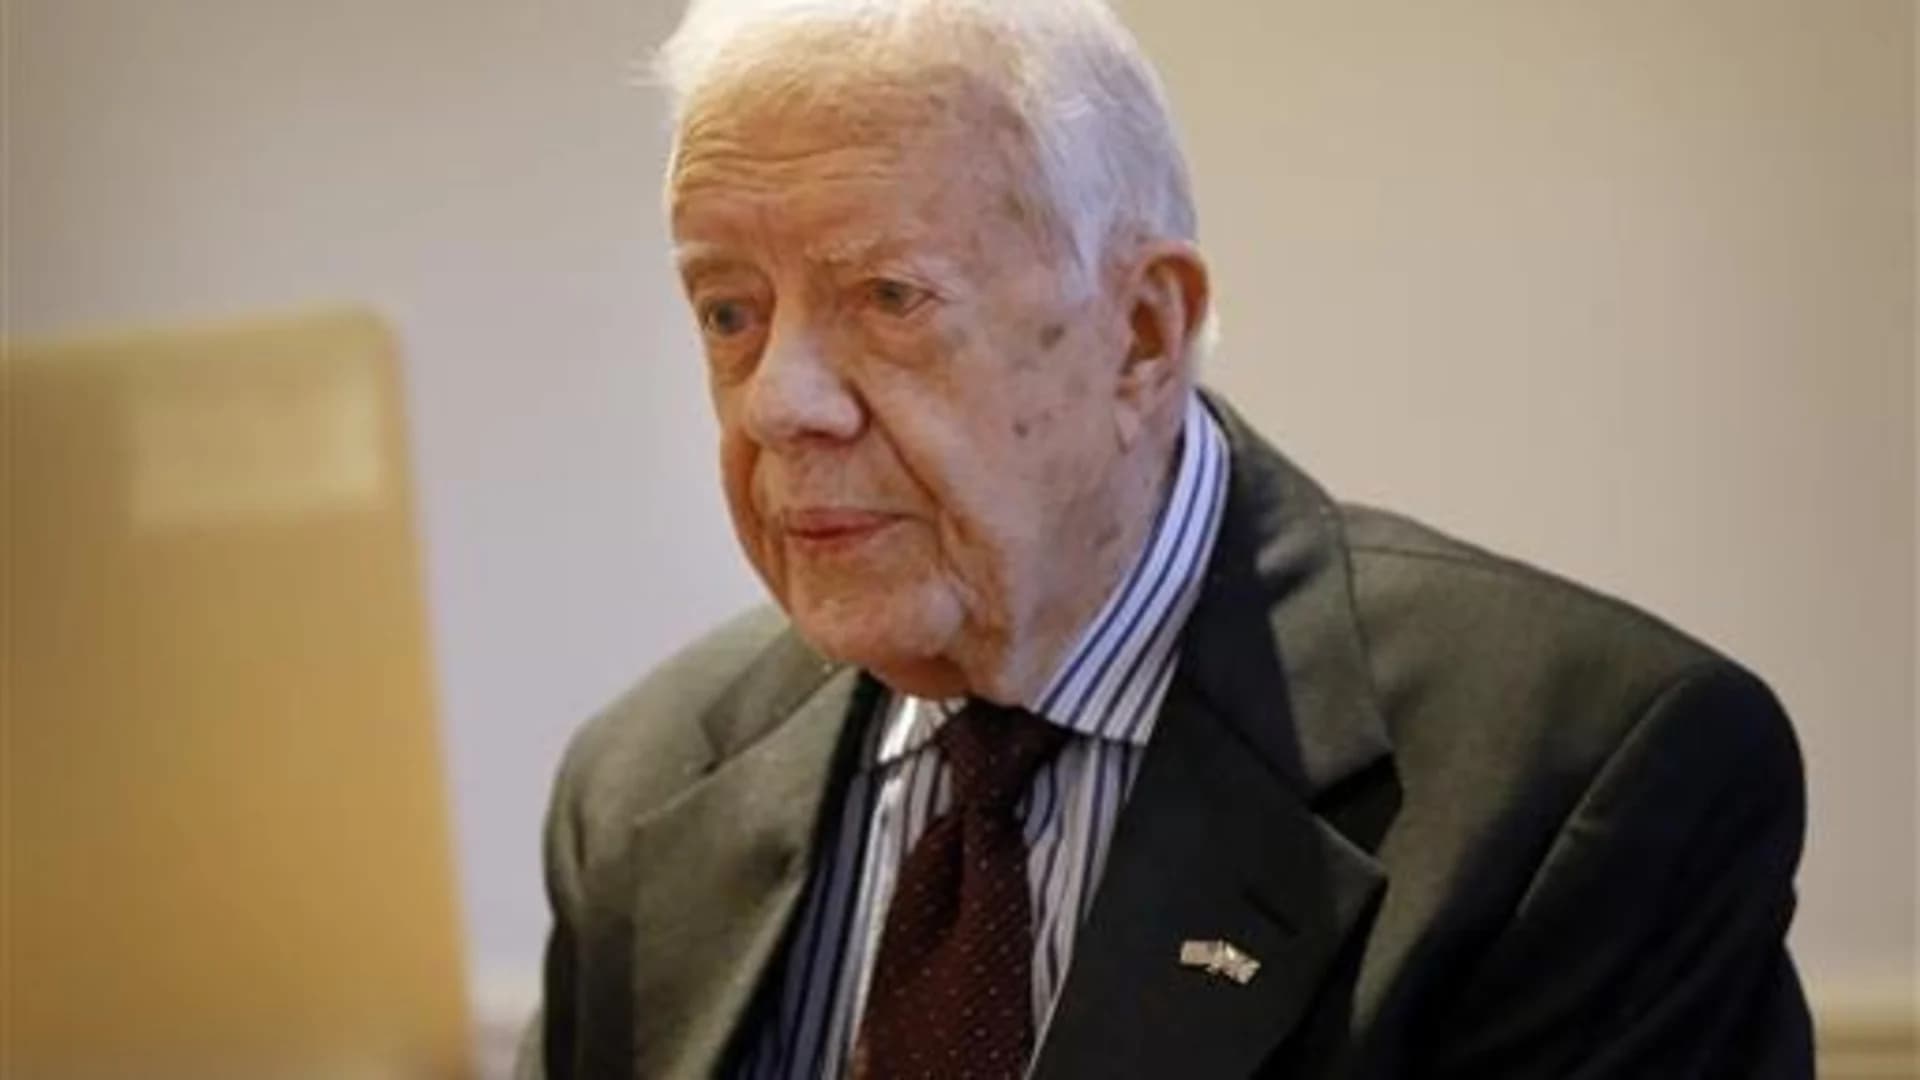 Former President Jimmy Carter enters hospital for surgery